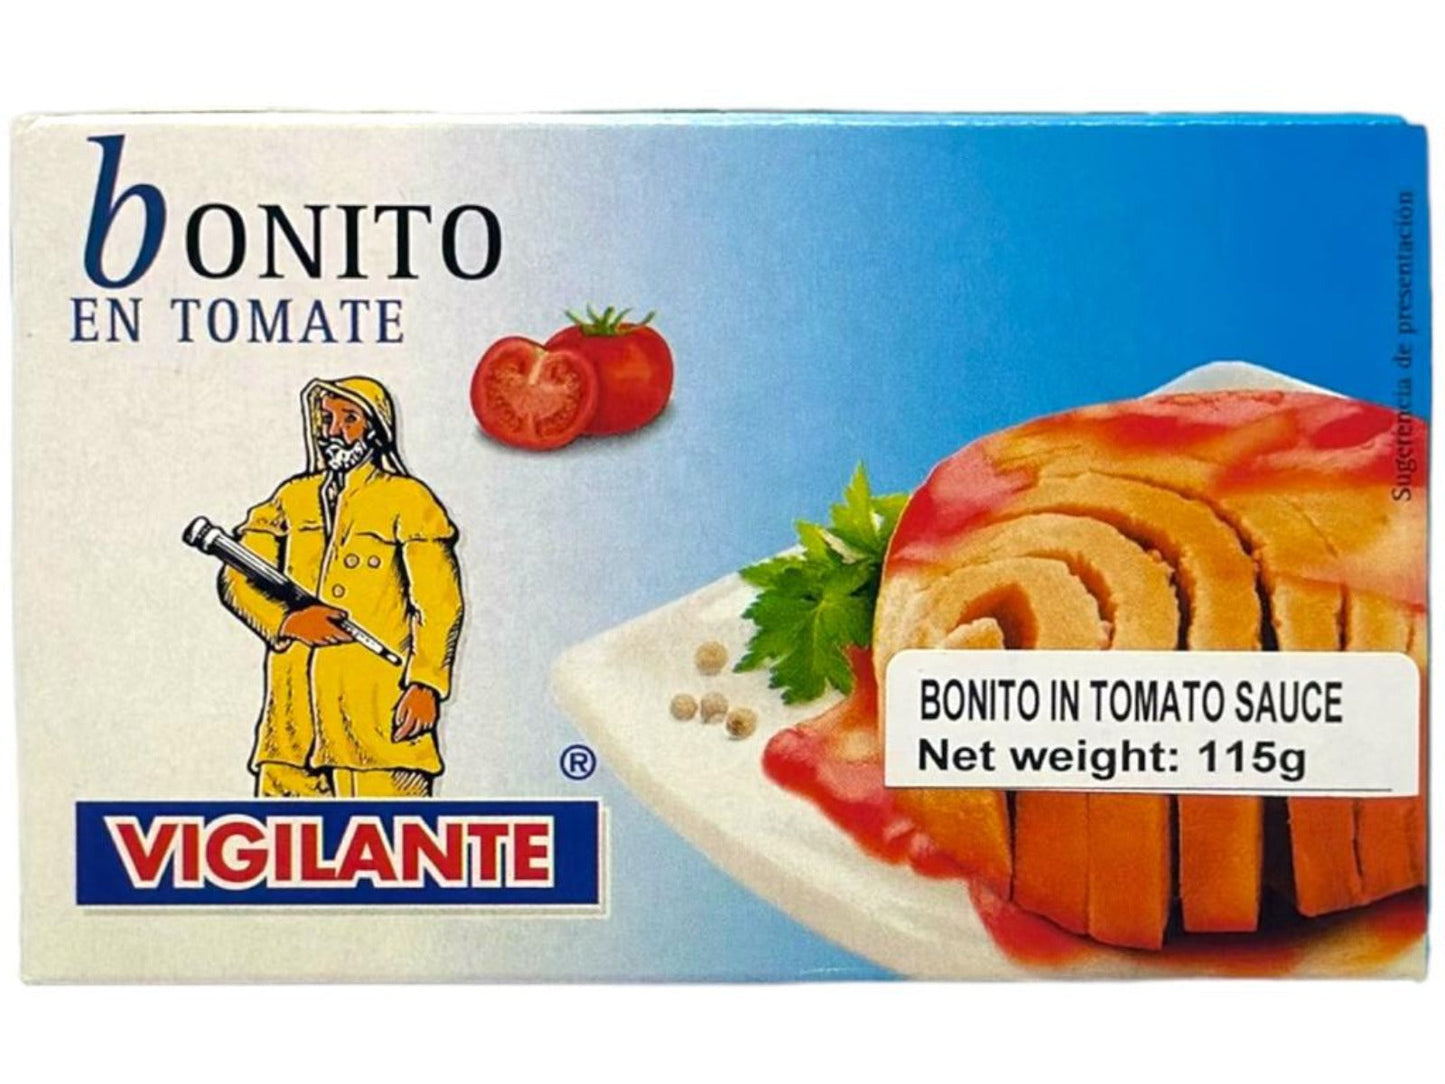 Vigilante Bonito en Tomate - Spanish Bonito in Tomato Sauce 115g - 4 Pack Total 460g Best Before Jan 2027